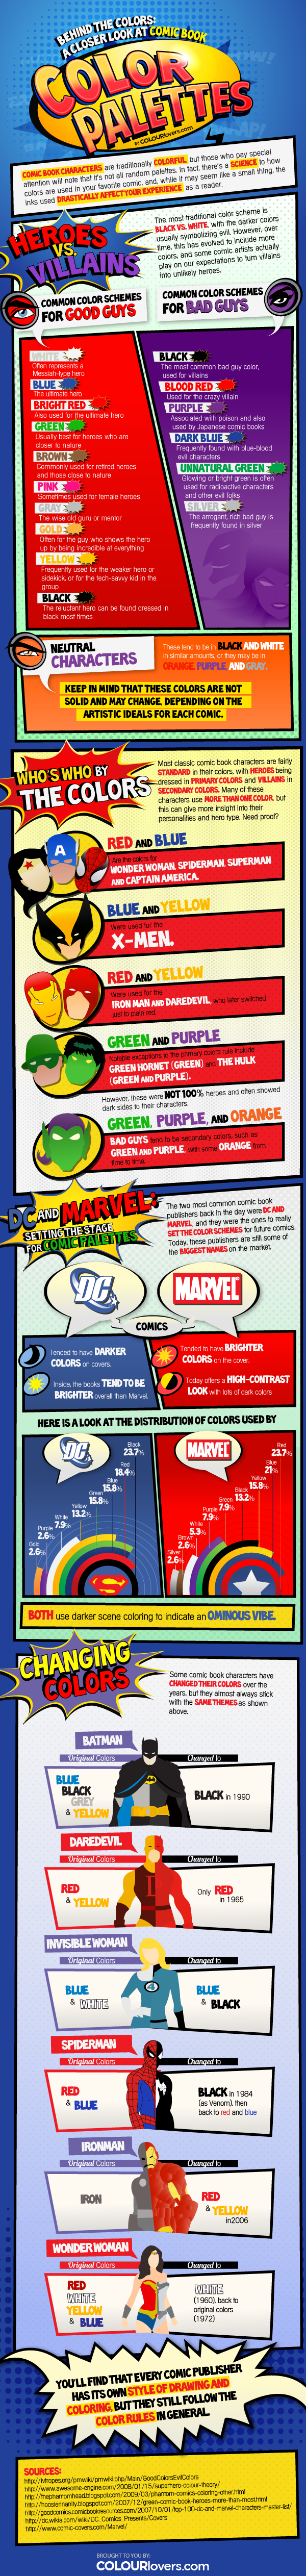 The Superhero Colors of Good vs. Evil (INFOGRAPHIC)